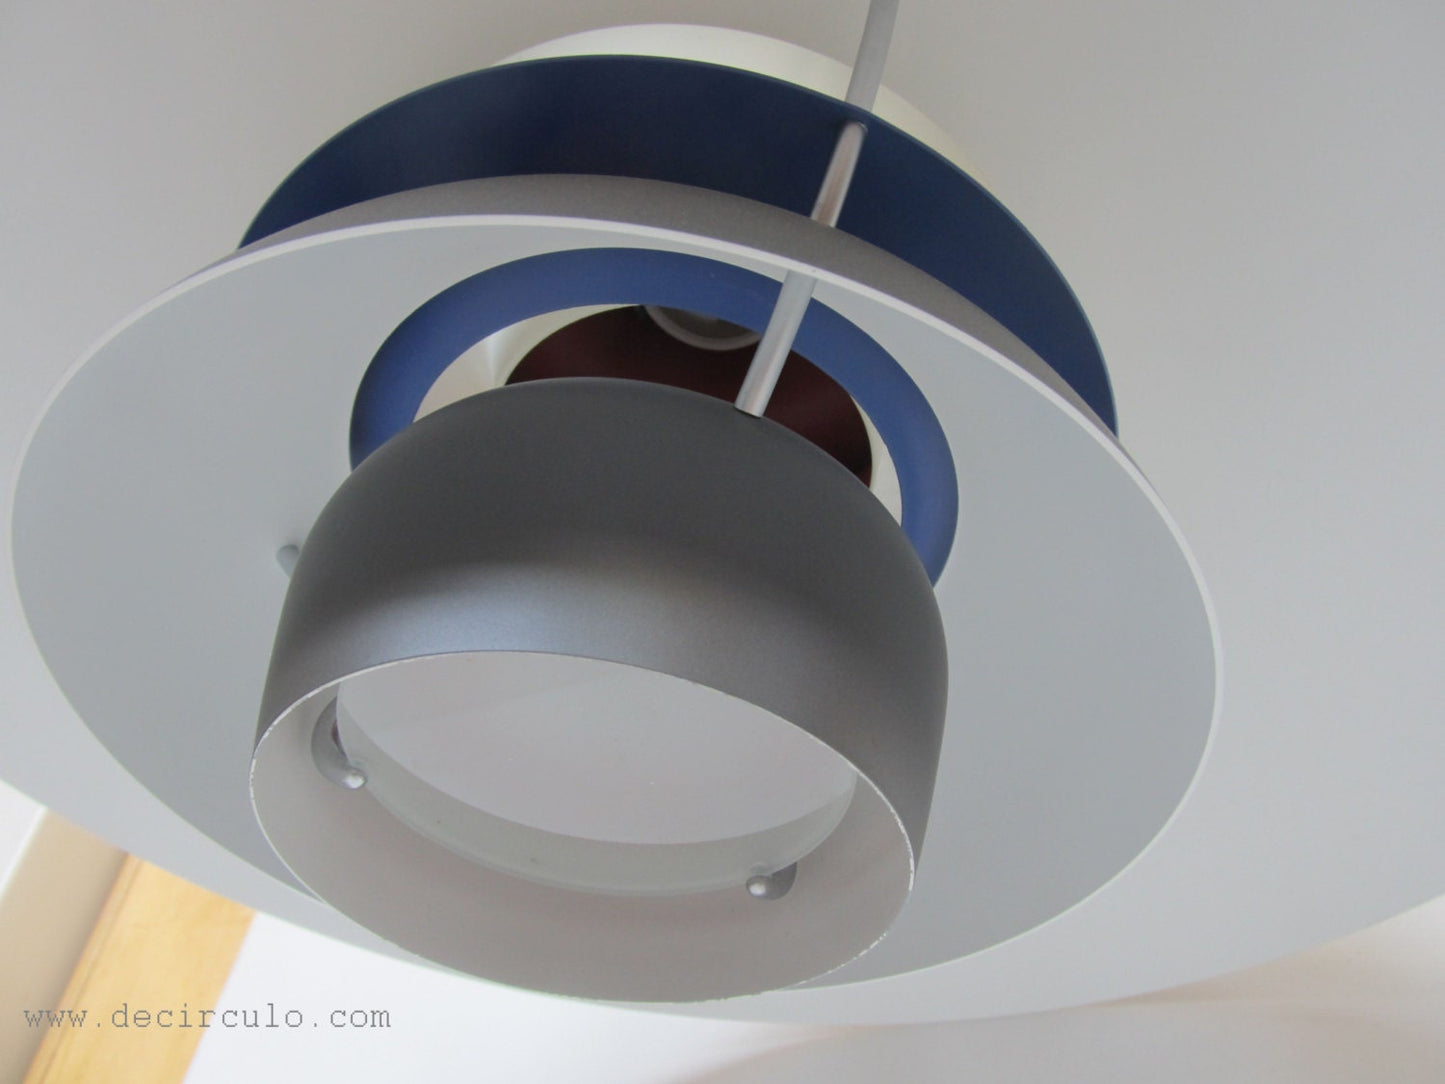 PH5 Pendant Lamp by Louis Poulsen Design: Poul Henningsen. Dark gray